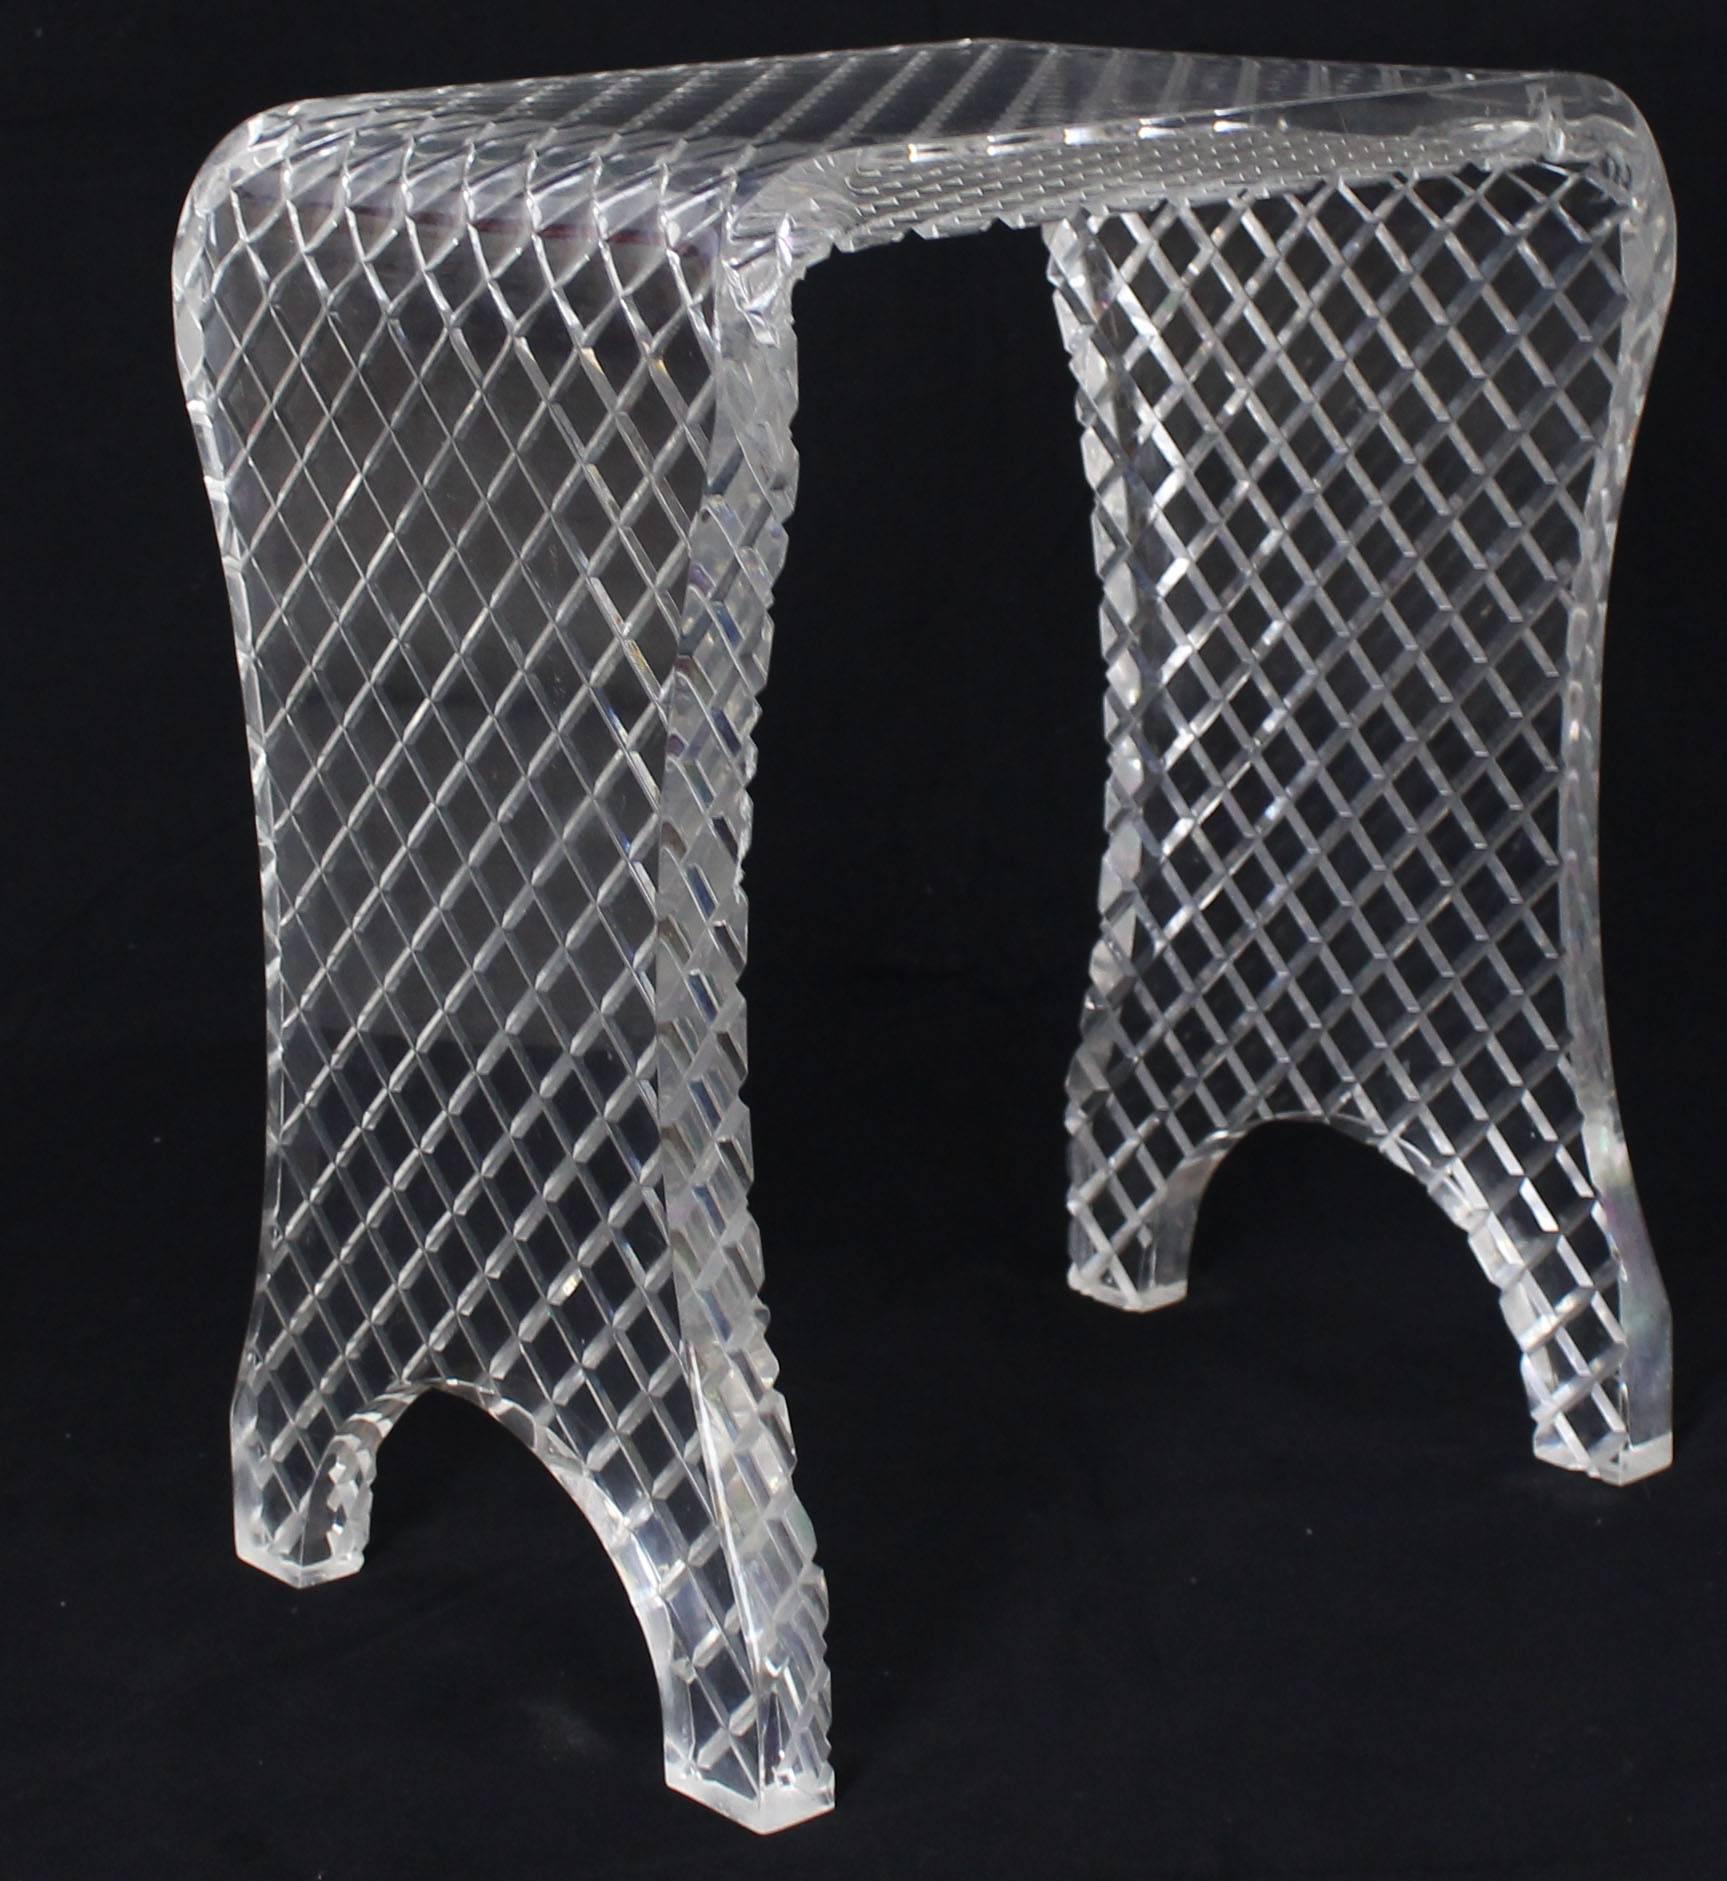 Mid-Century Modern diamond cut Lucite bench or stool.
         